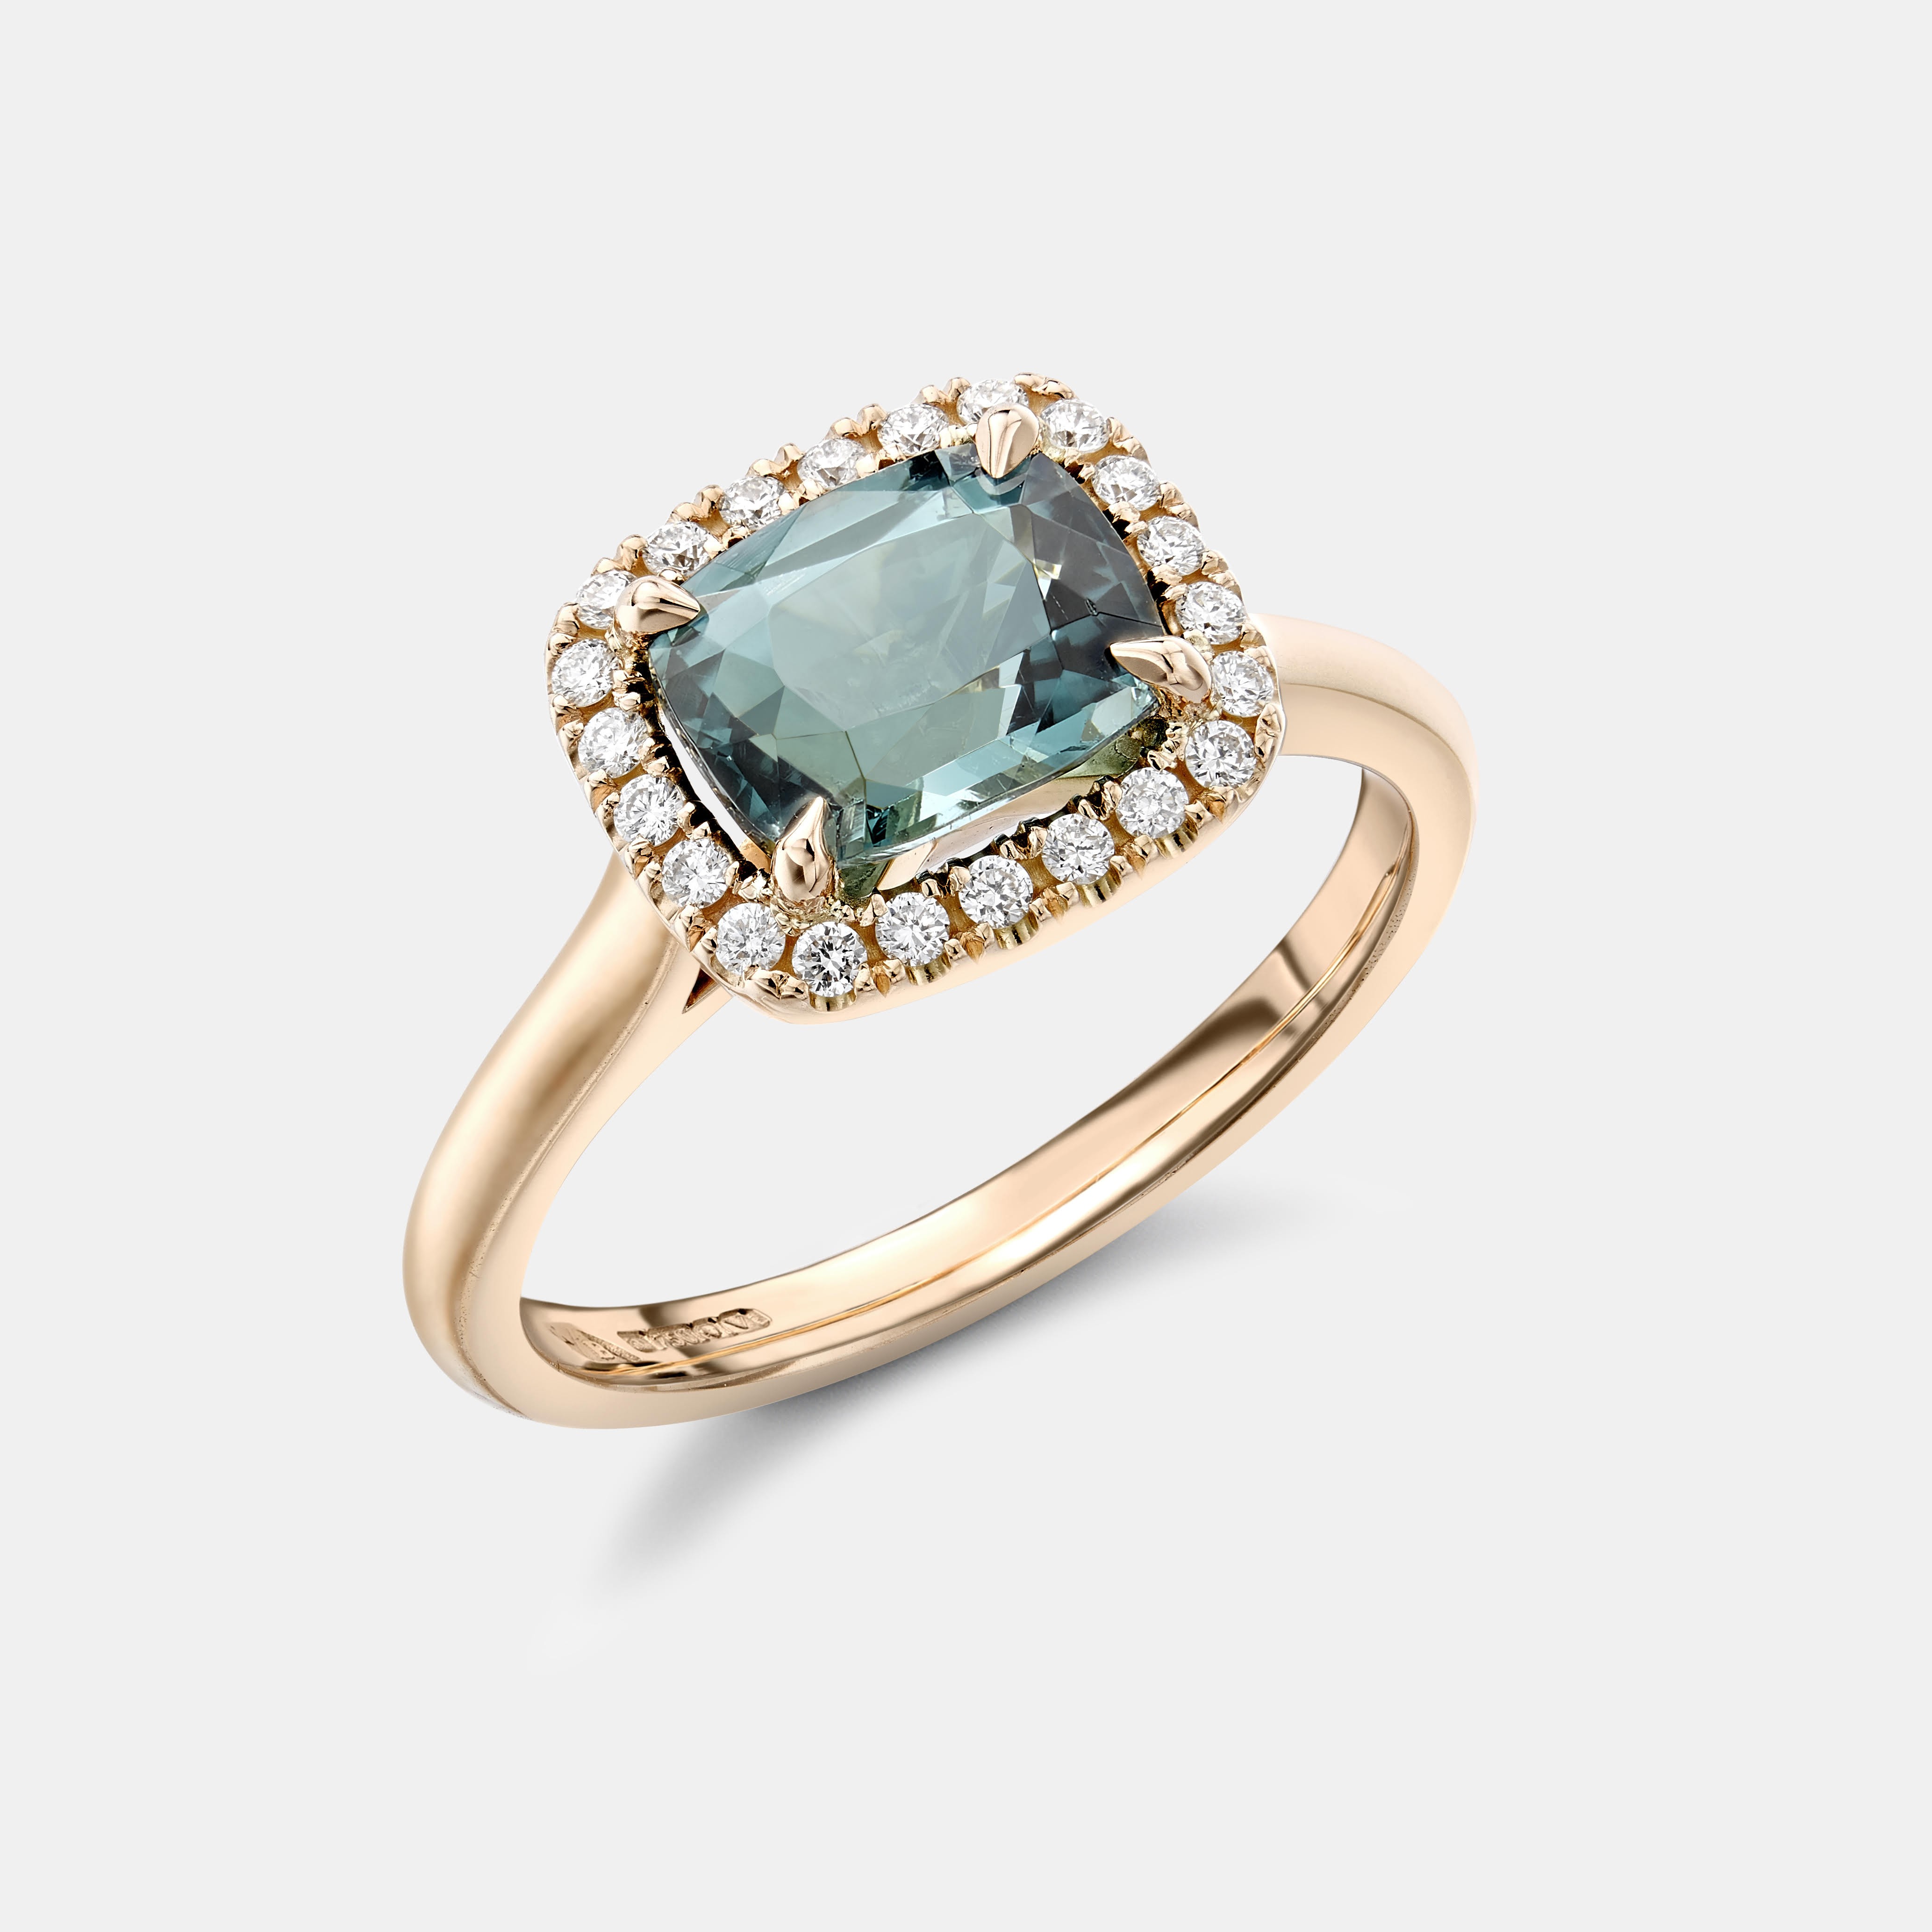 The Yellow Gold, Diamond and Blue Tourmaline Ring